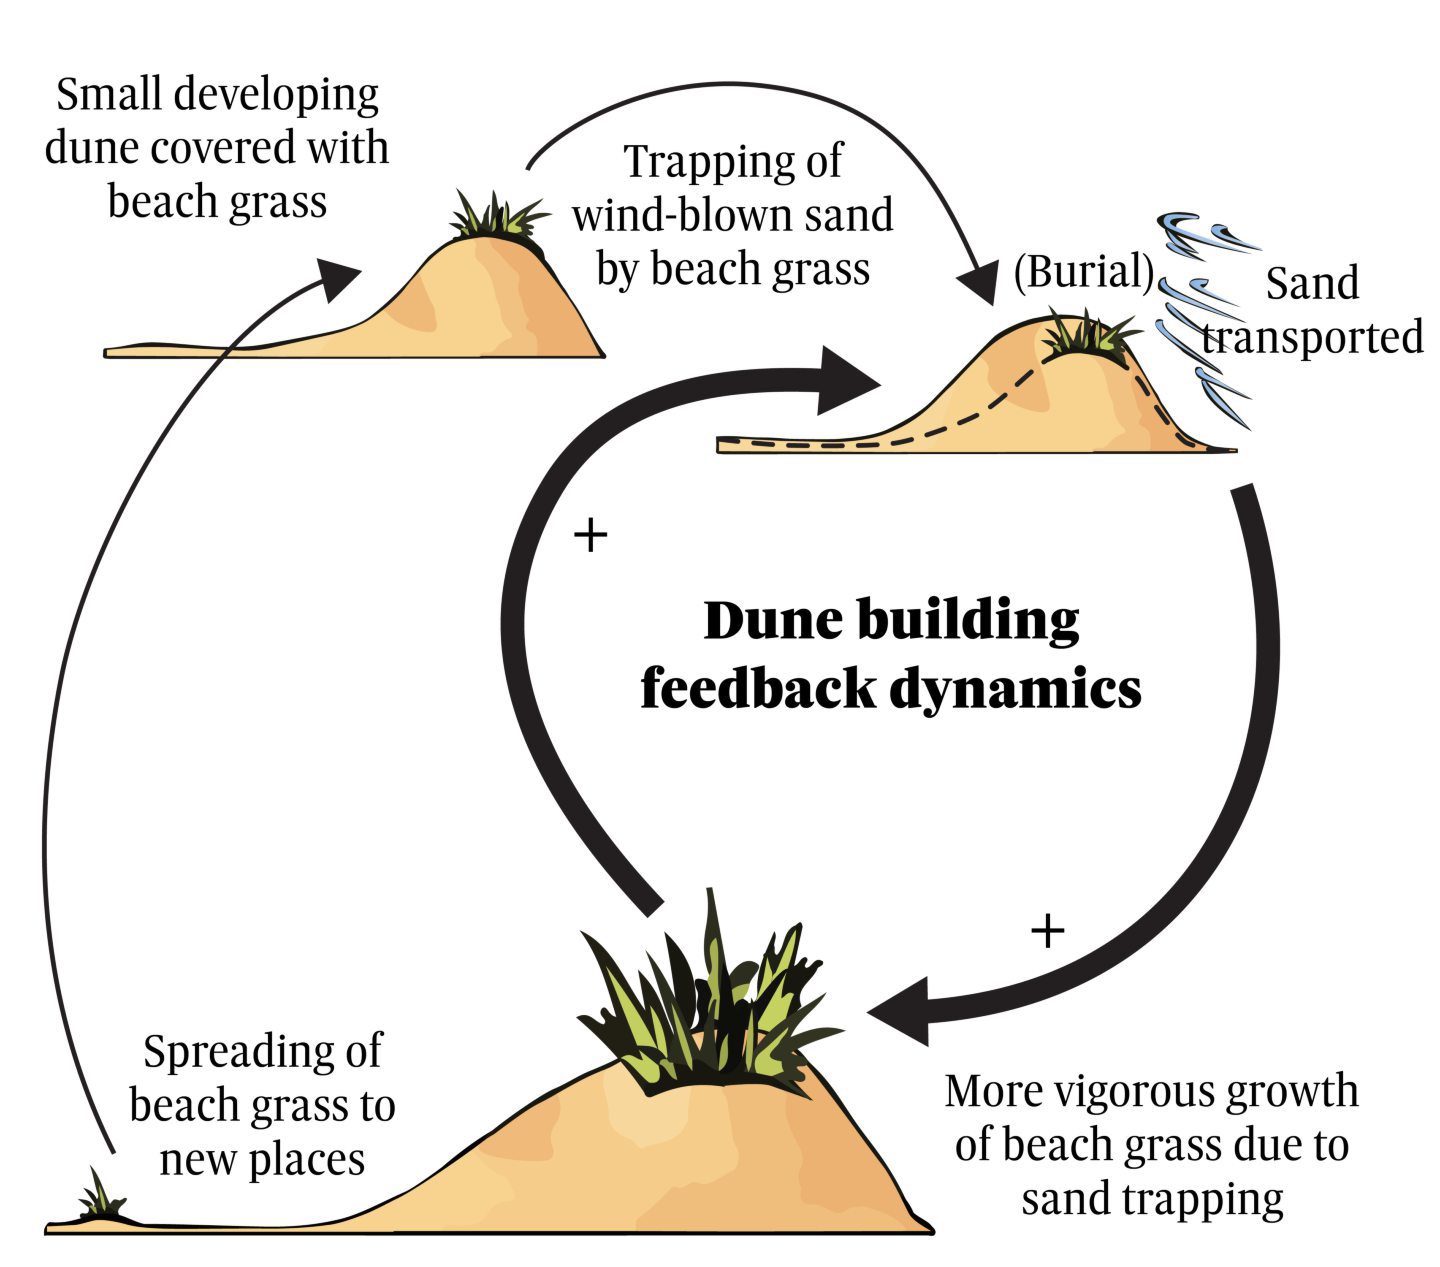 A diagram explaining the dune building feedback dynamics